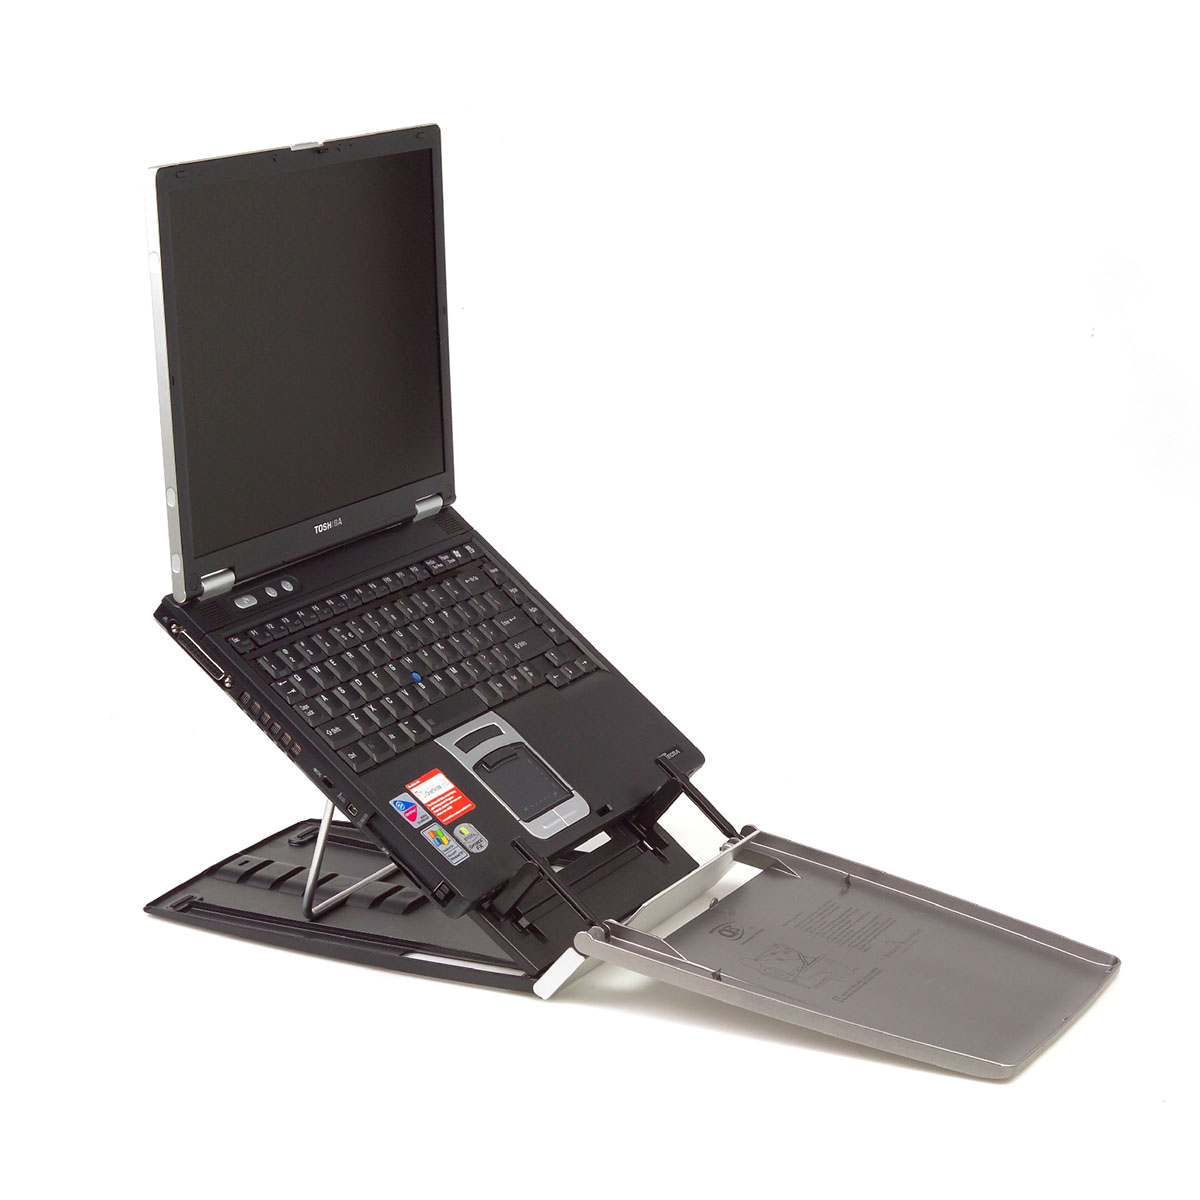 Ergo Q 330 Laptop Stand By Bakker Elkhuizen 21